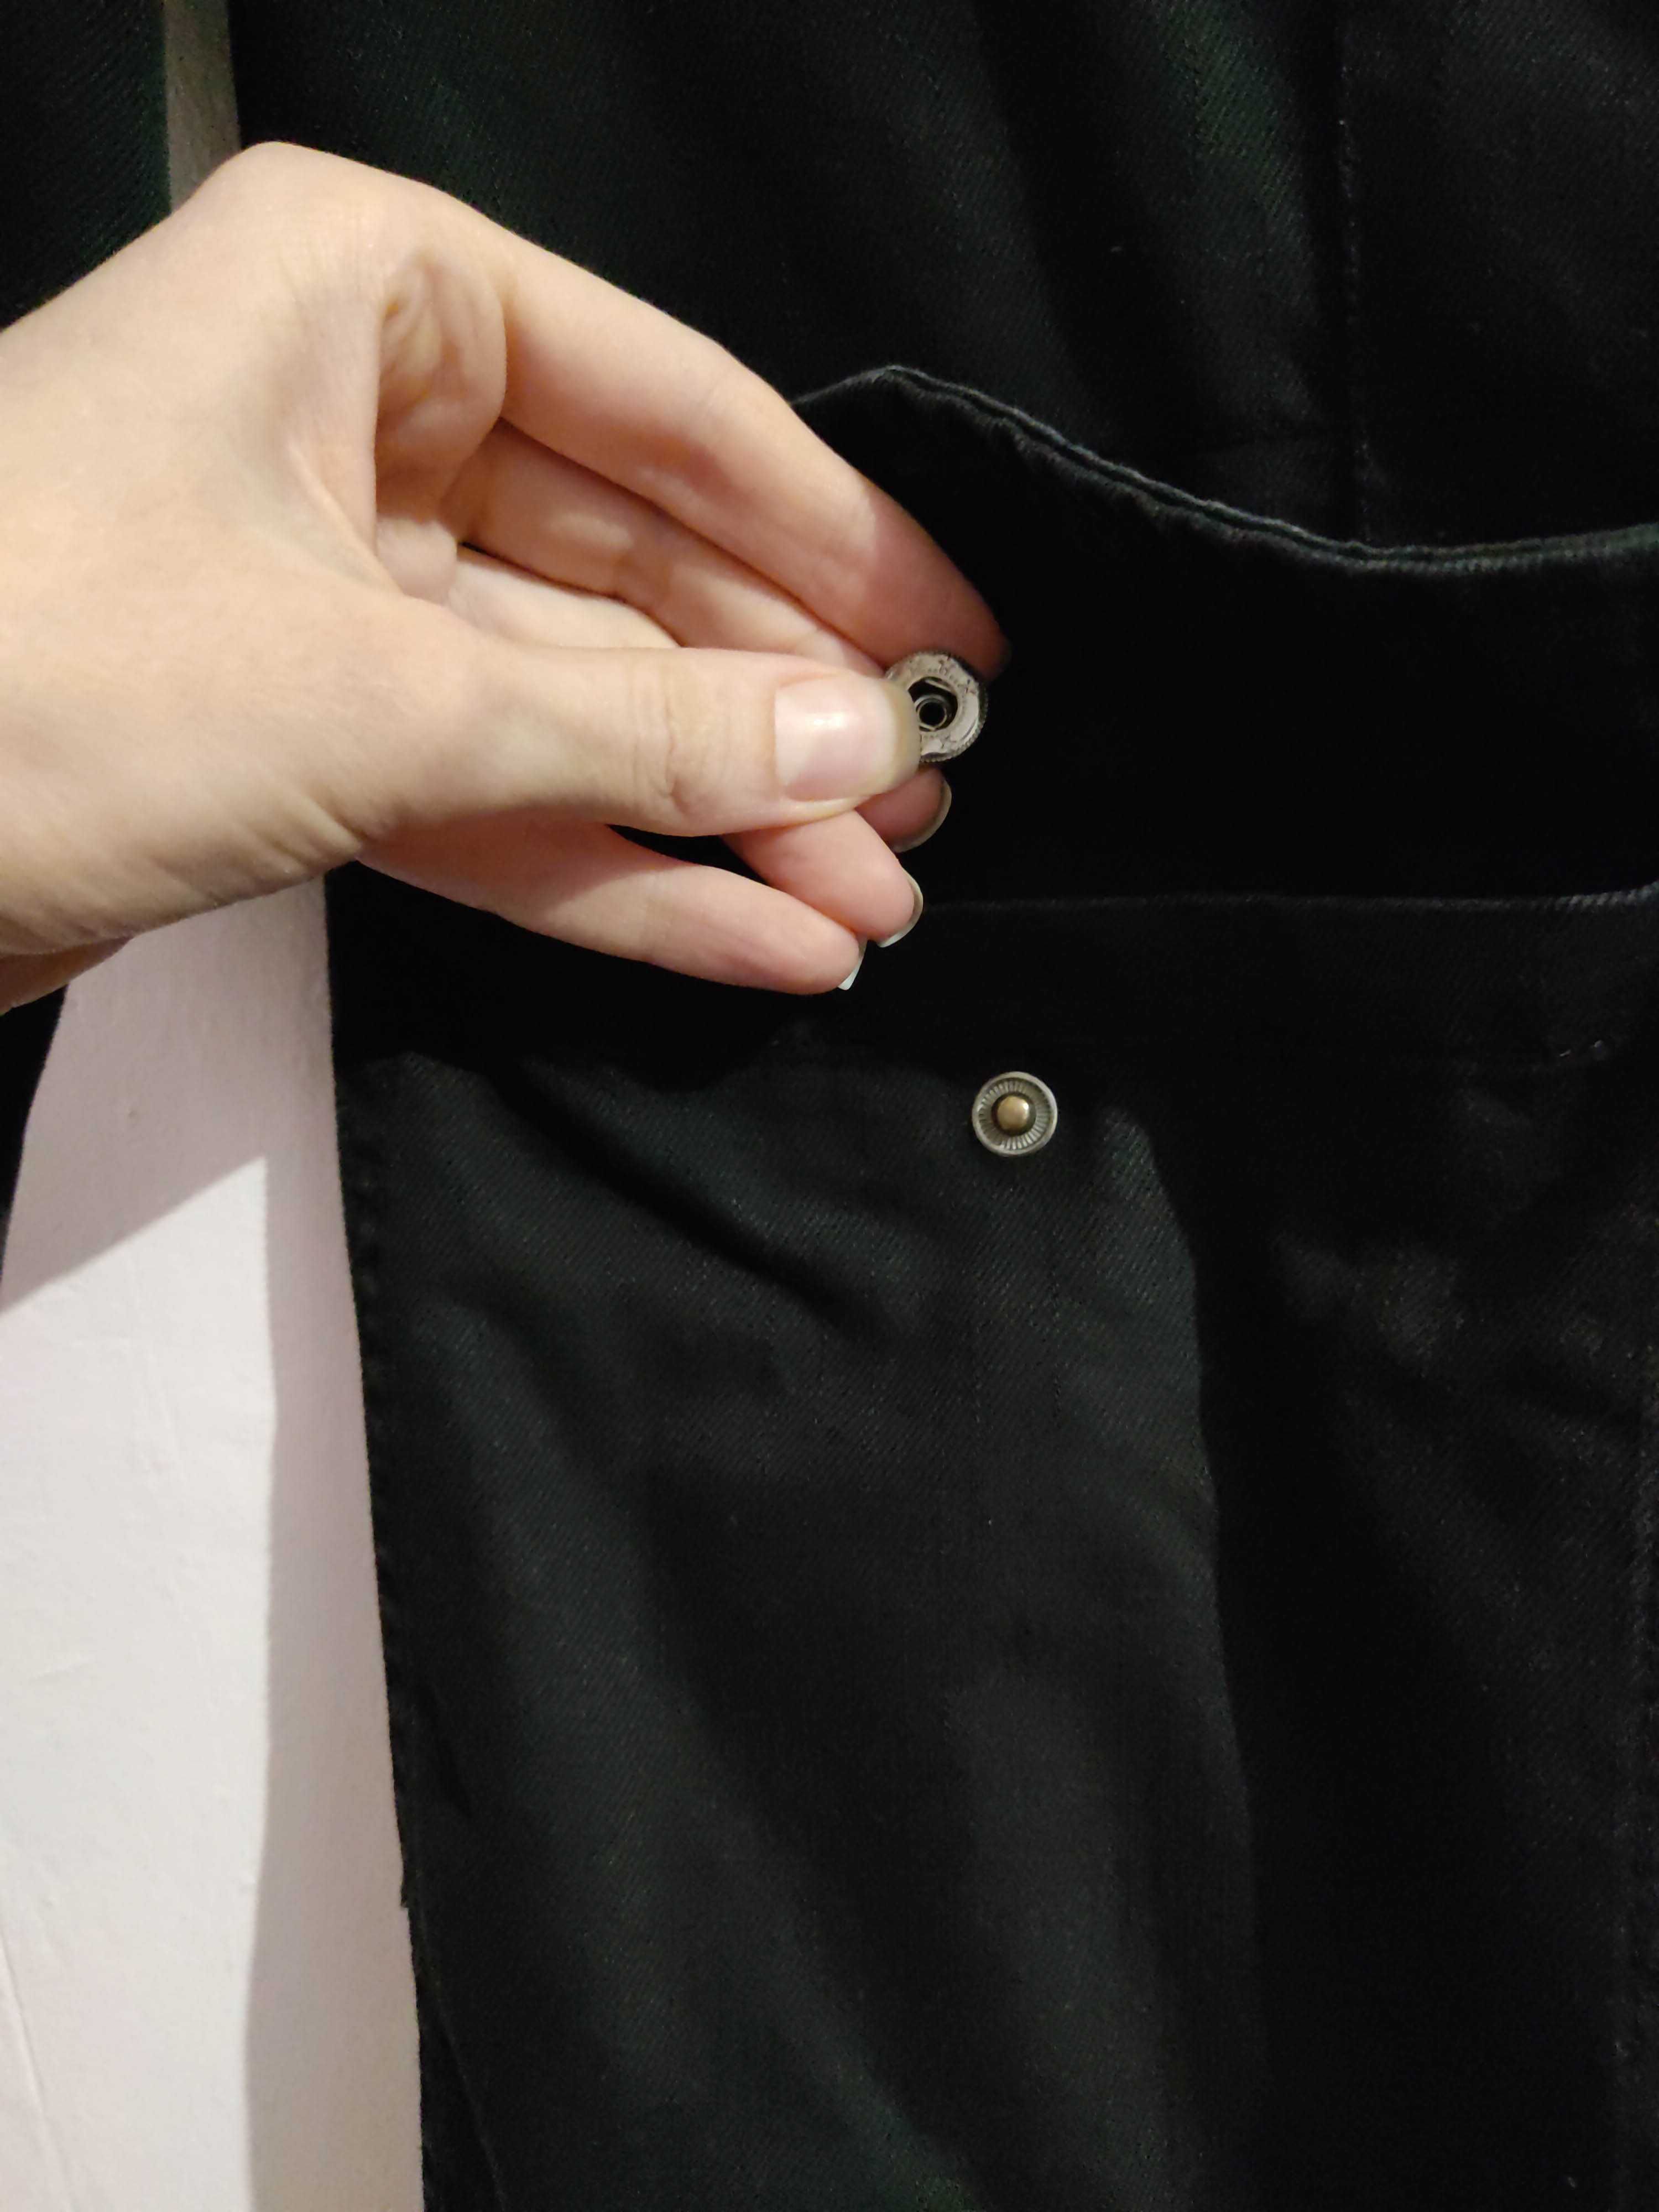 Джинсова жіноча куртка Чорне пальто куртка піджак тепла сорочка